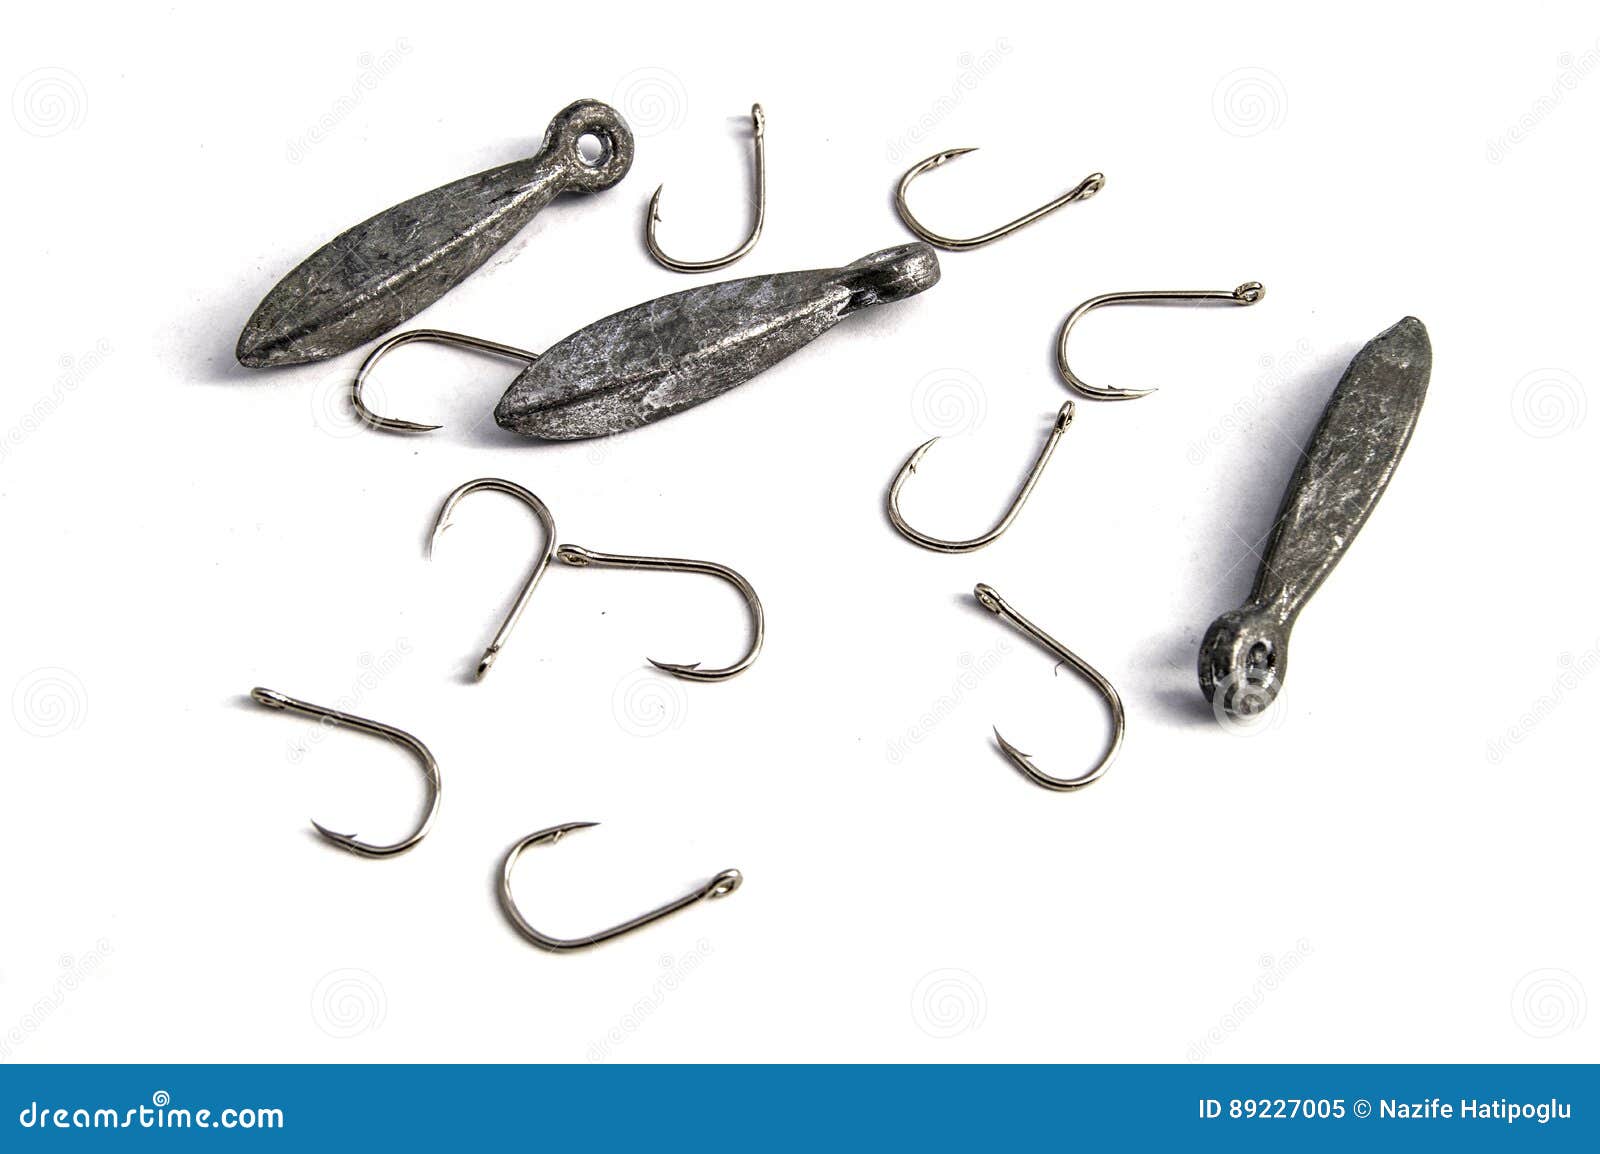 Fishing Needle, Fishing Hook for Fishing, Fishing Gear, Hook Fisherman  Needles, Stock Image - Image of eyes, bagels: 89227005